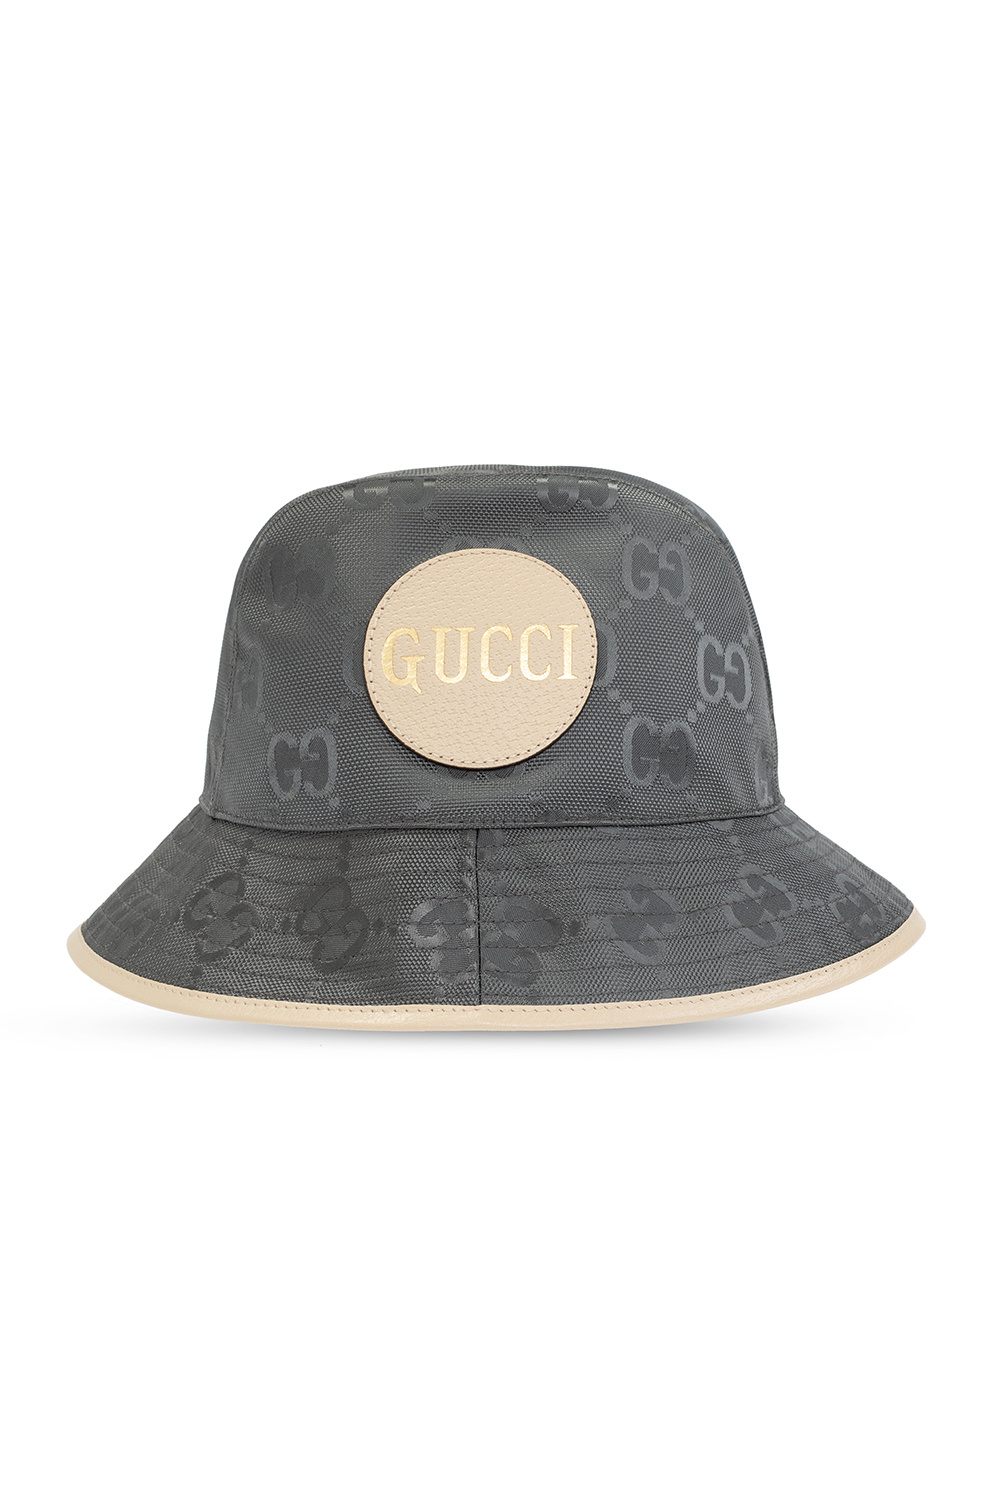 Gucci GG print BDS hat